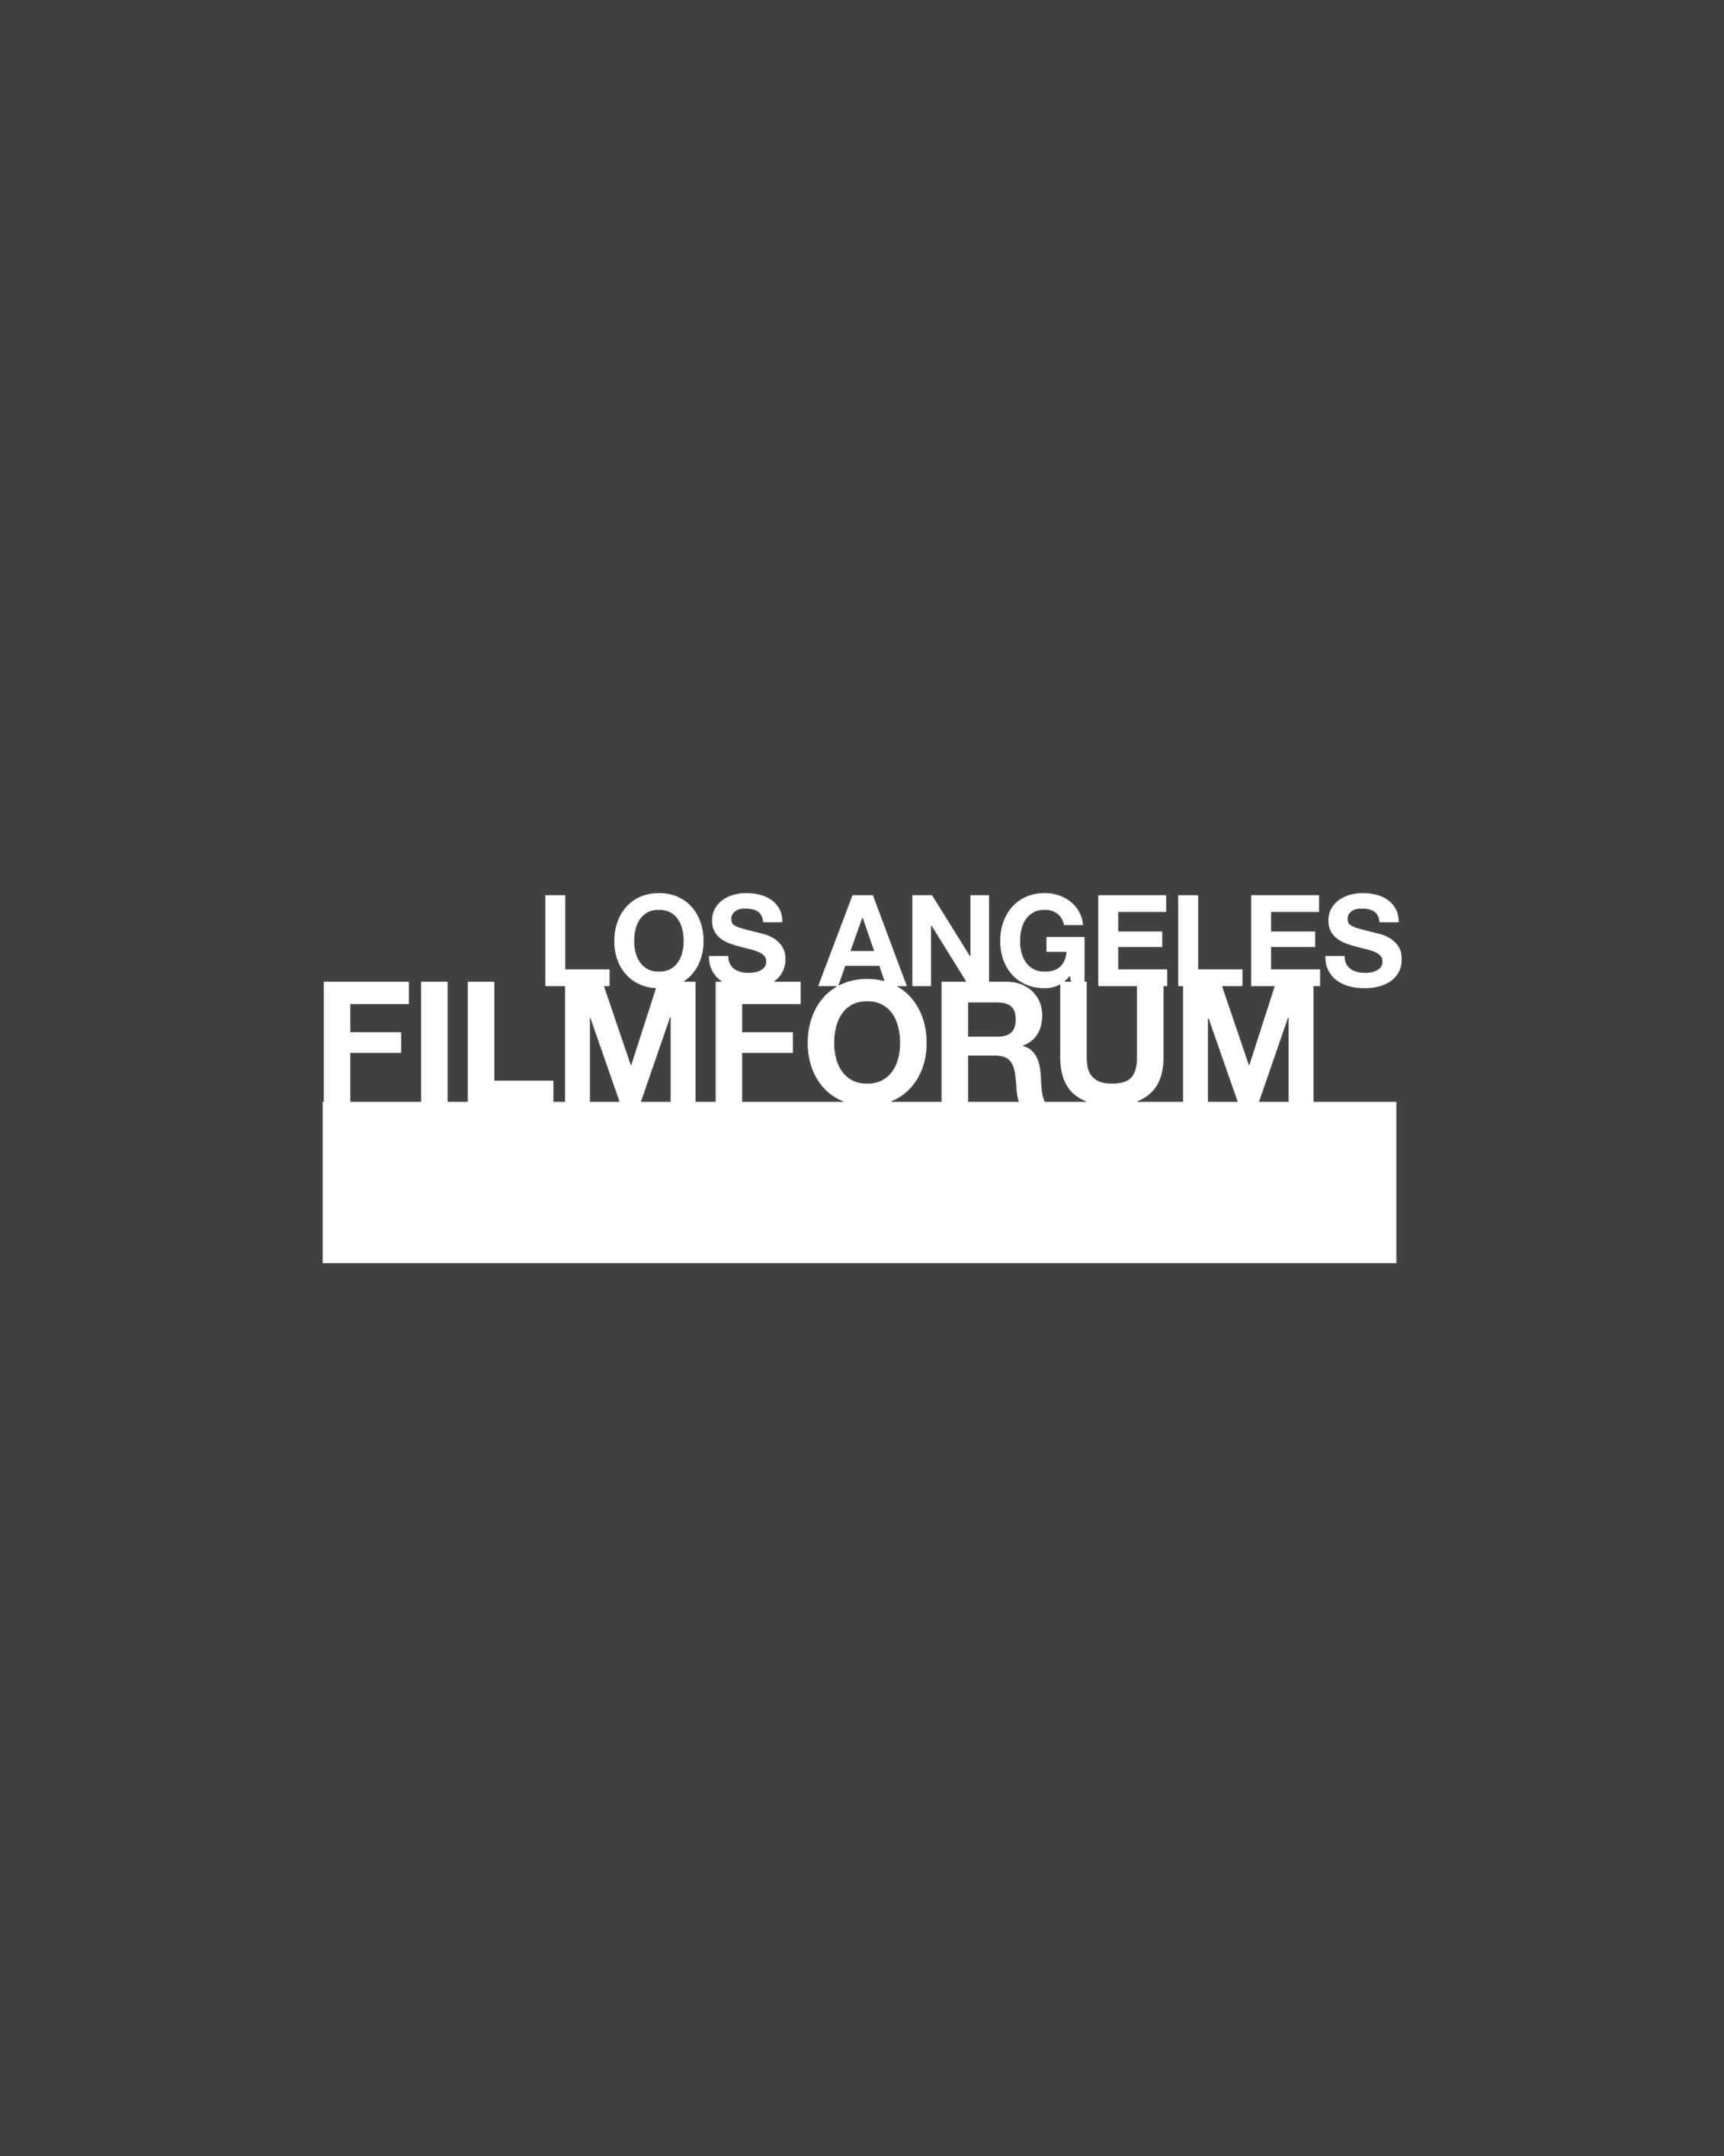 Los Angeles Filmforum Logo